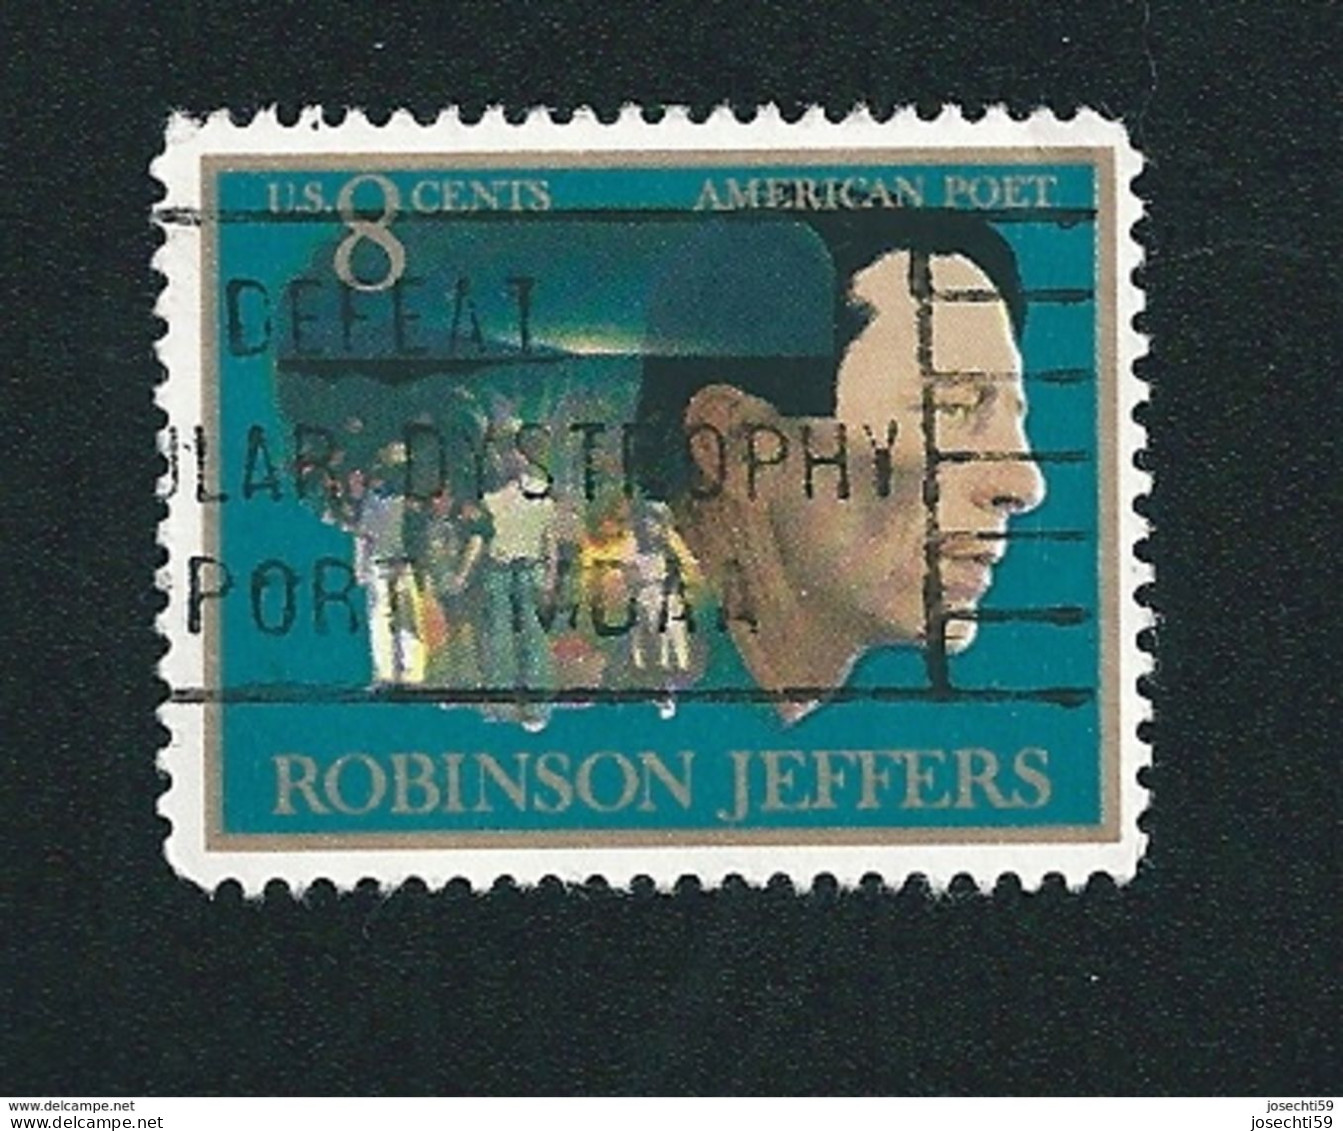 N° 1002 John Robinson Jeffers (1887-1962), American Poet   Timbre Etats-Unis (1973)   Oblitéré - Usados